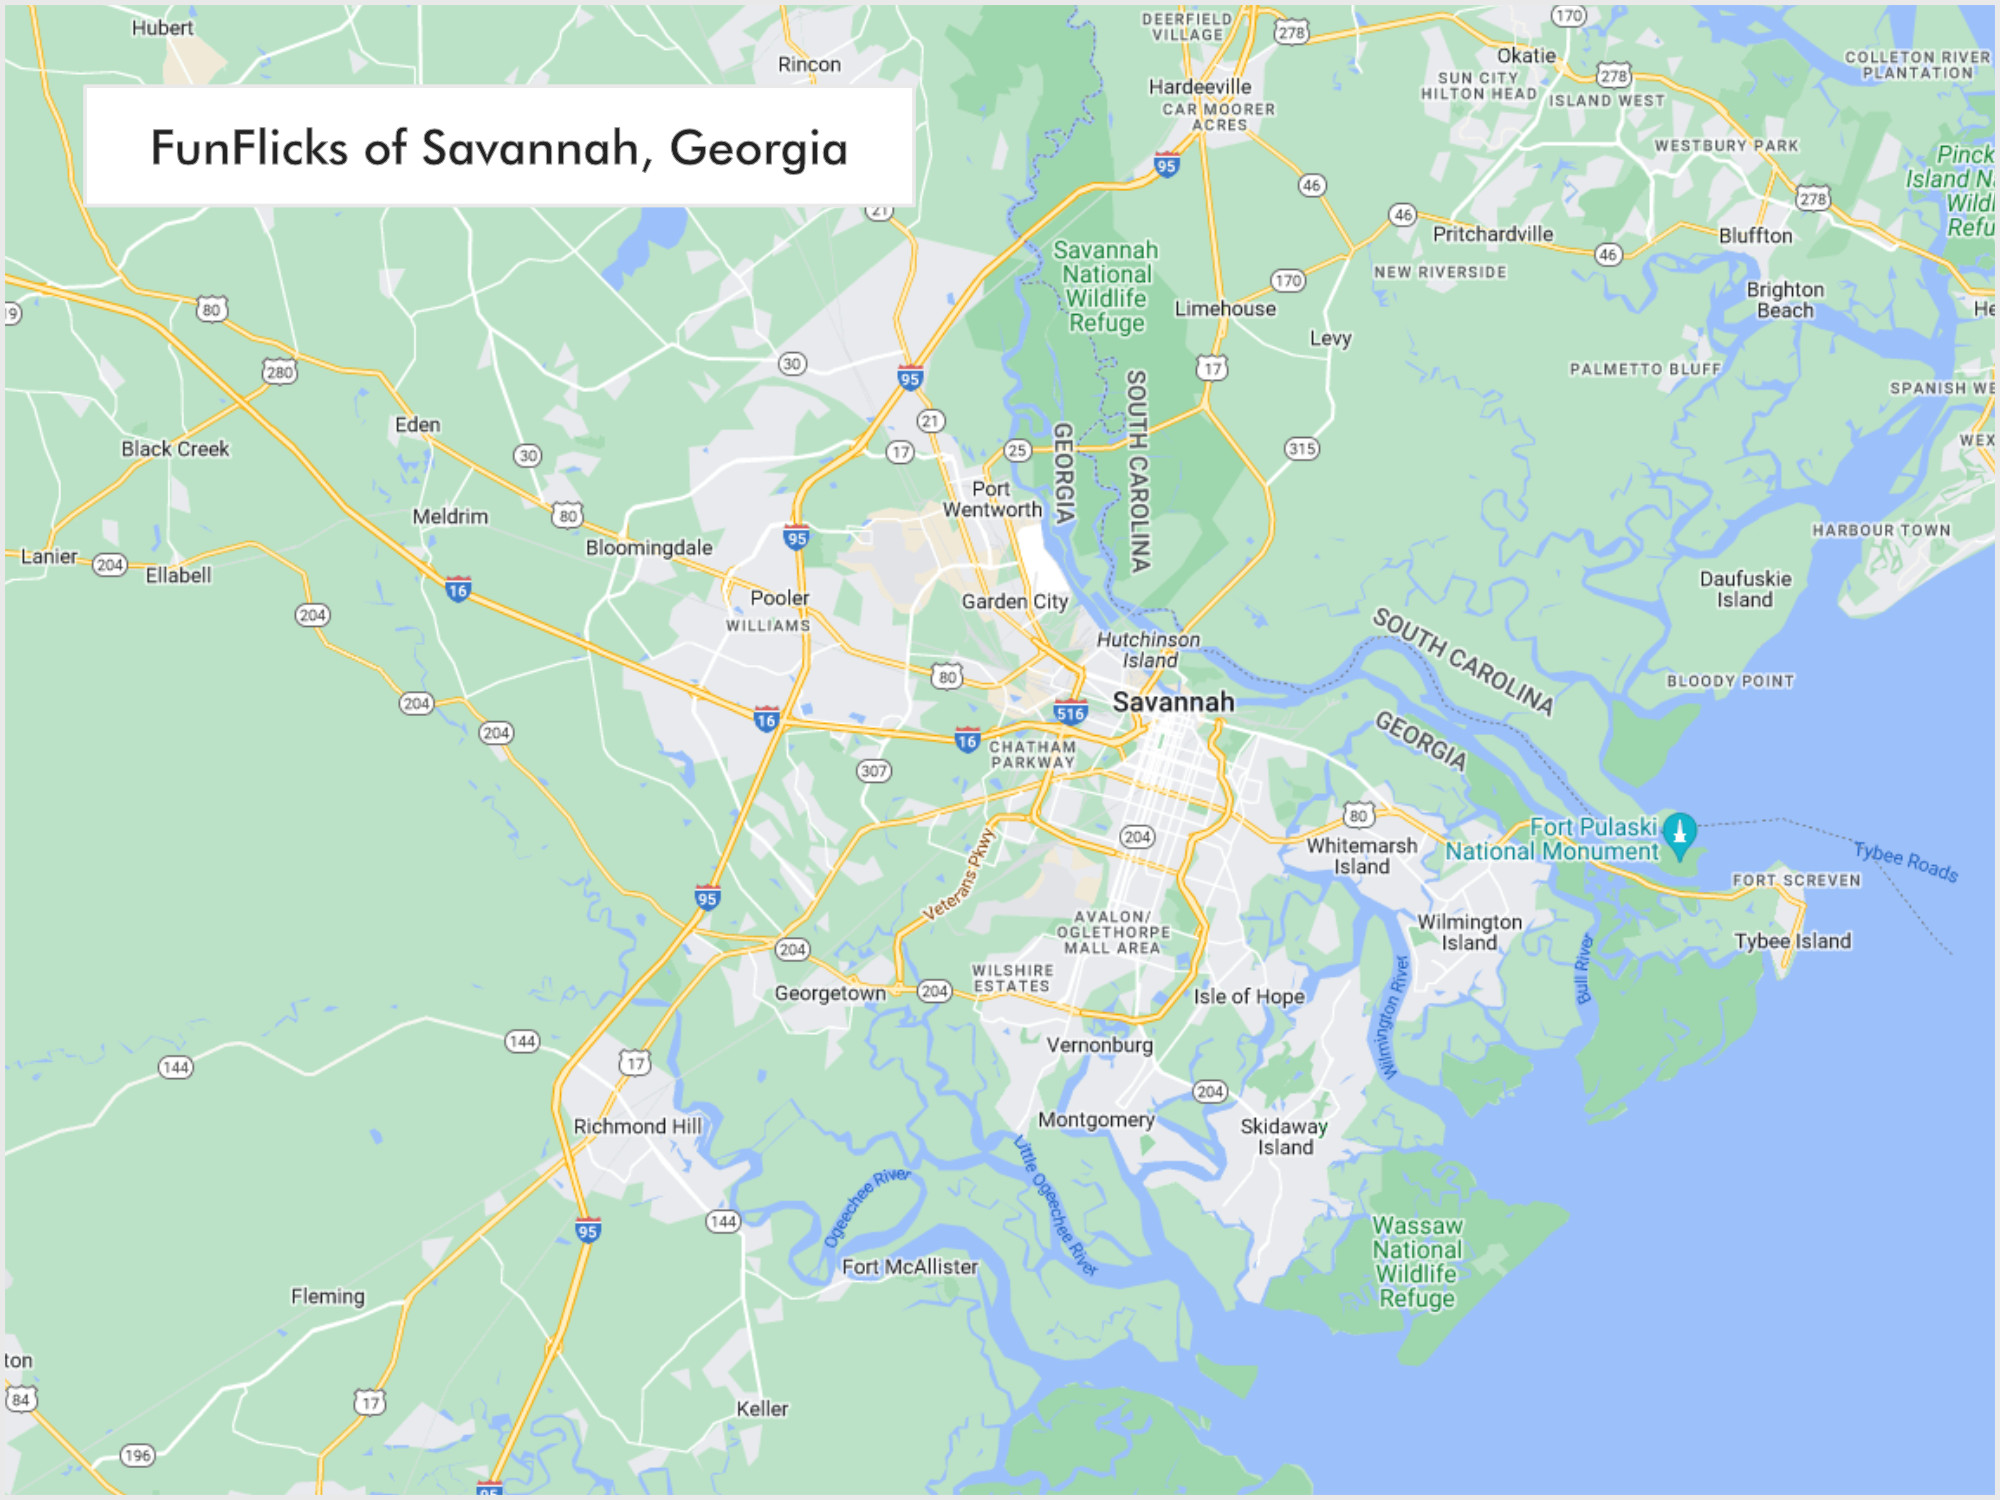 FunFlicks® Savannah territory map